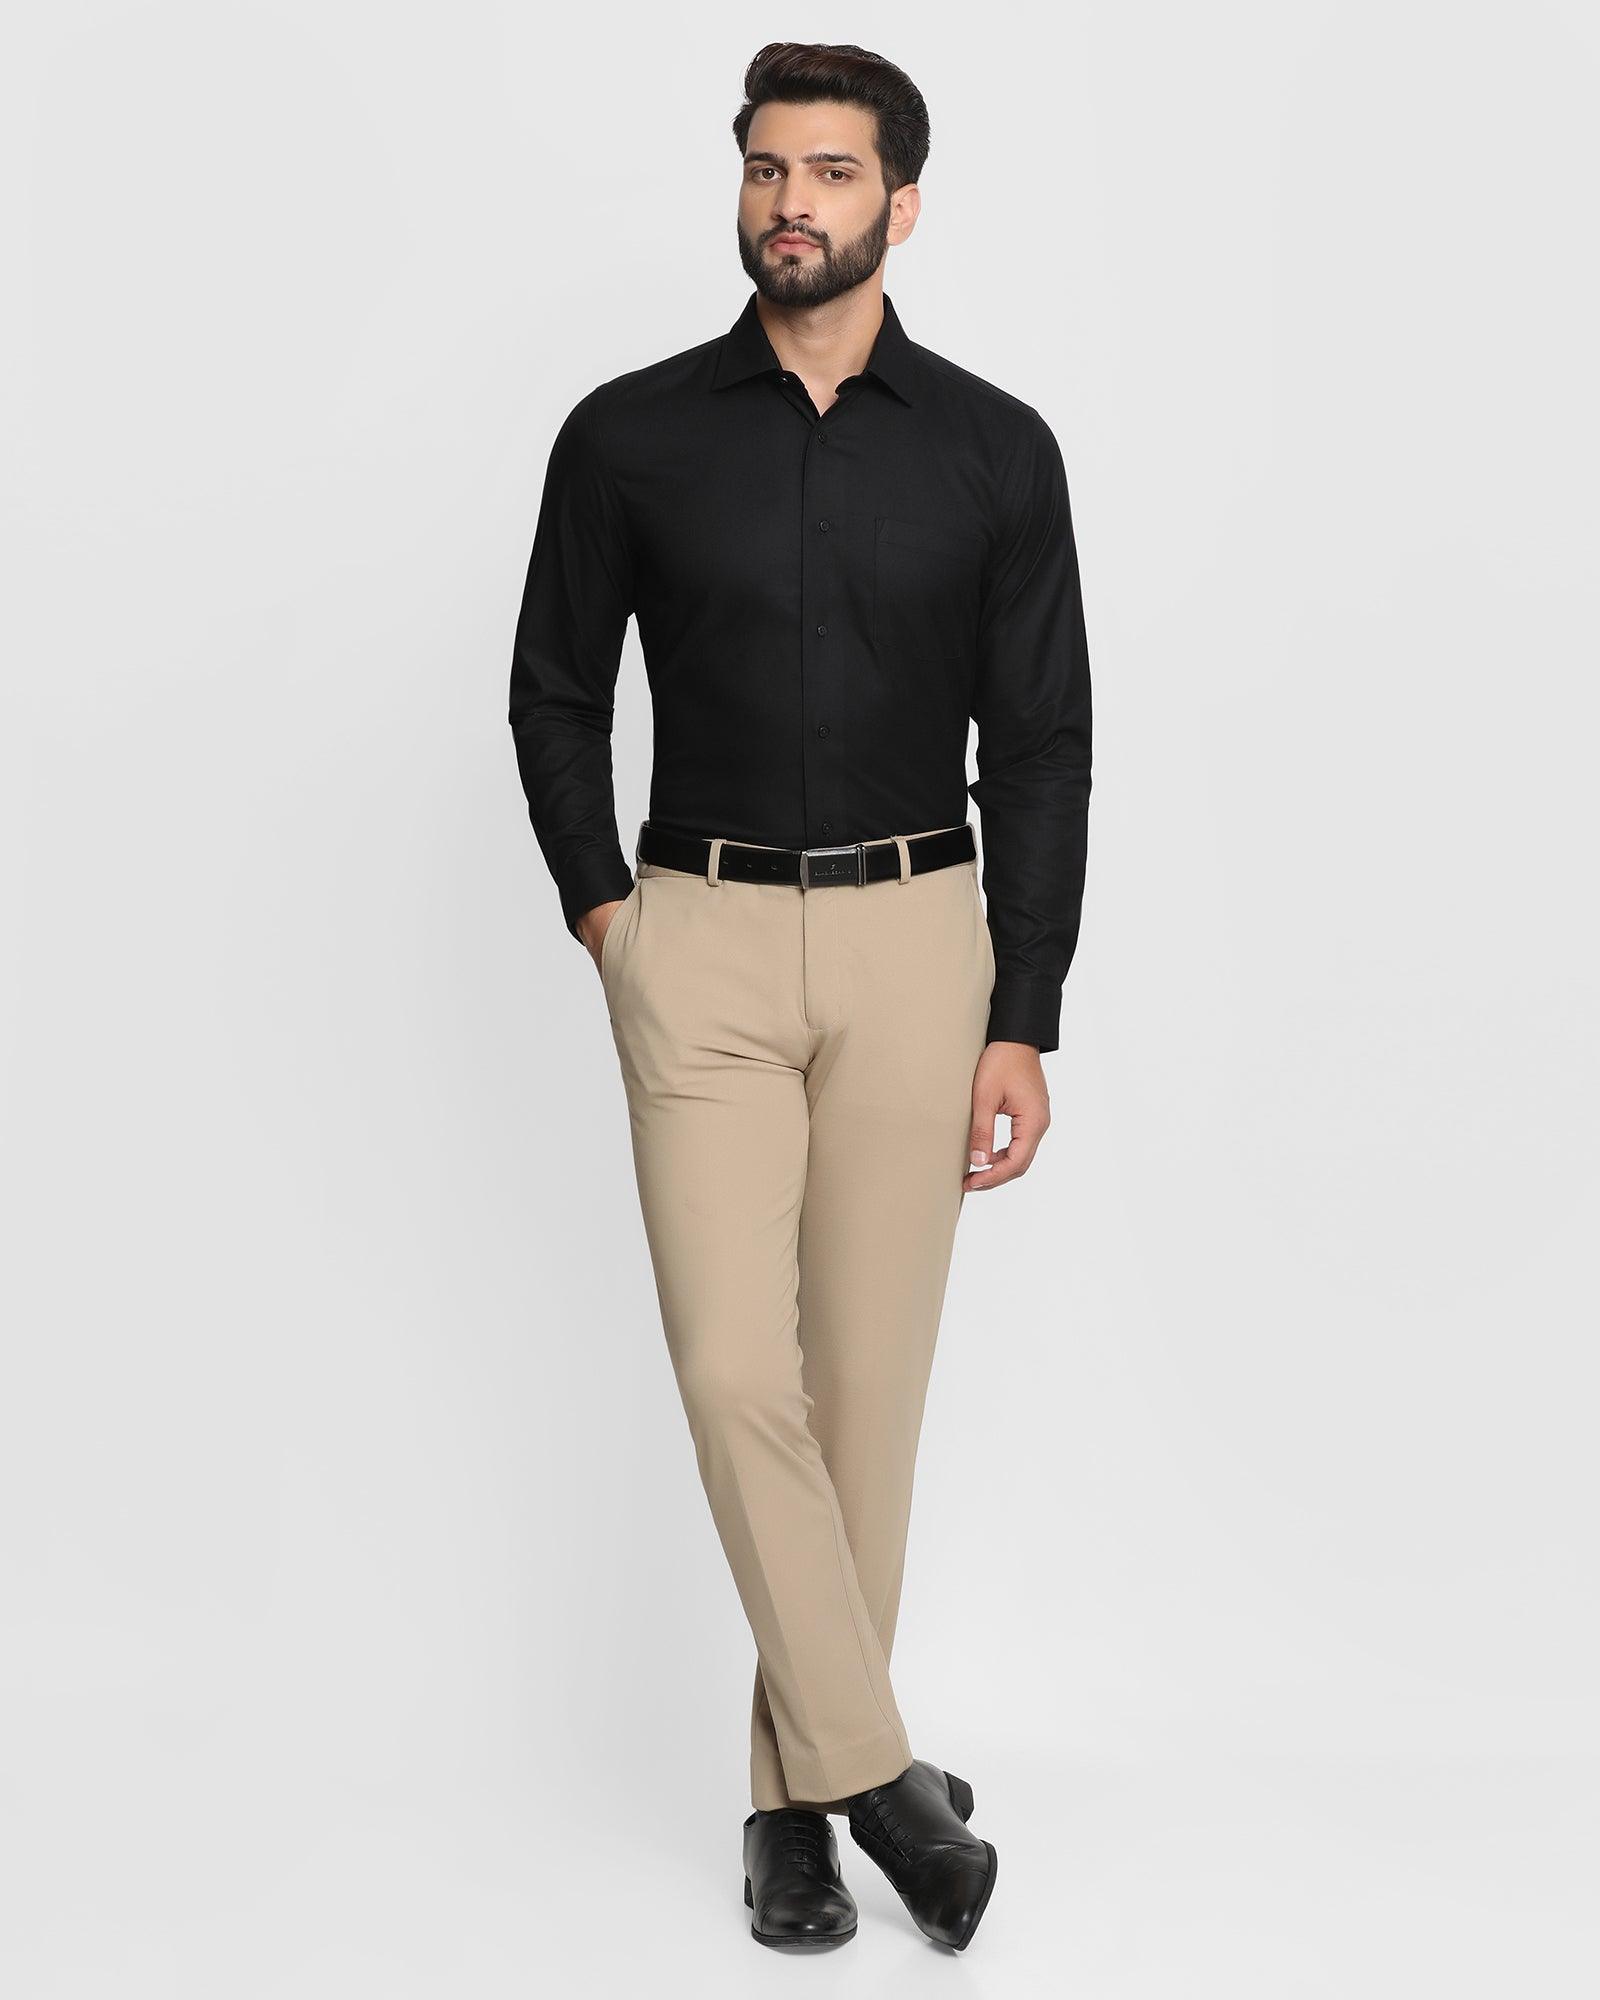 Black shirt khaki pants | Groom and groomsmen, Bbq wedding, April wedding